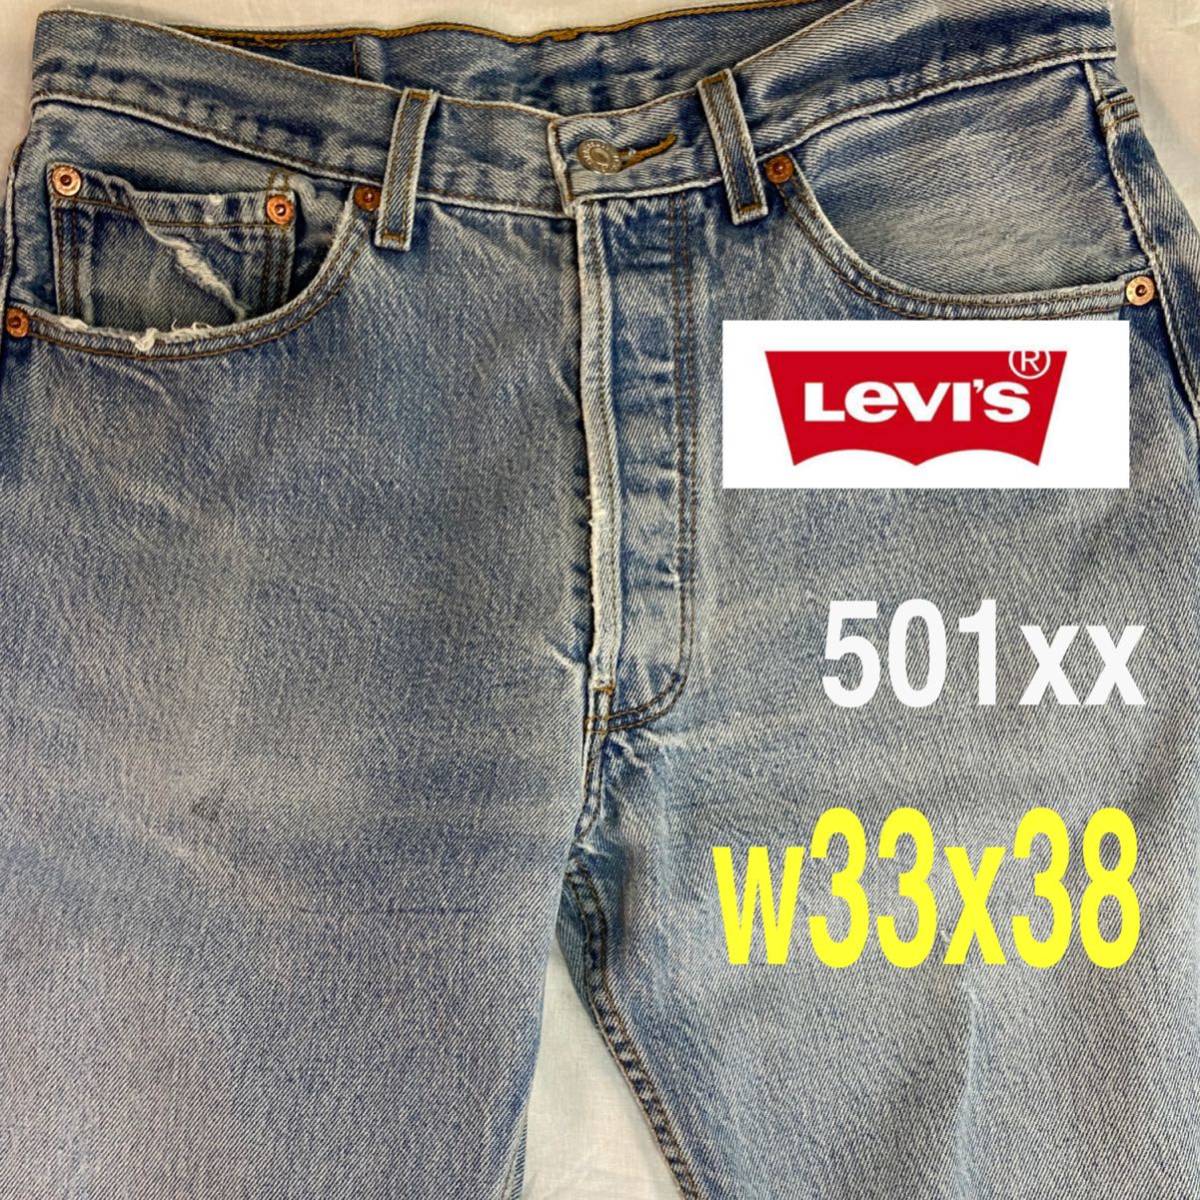 Levi’s リーバイス 501xx デニムパンツ　W33x38. 4714